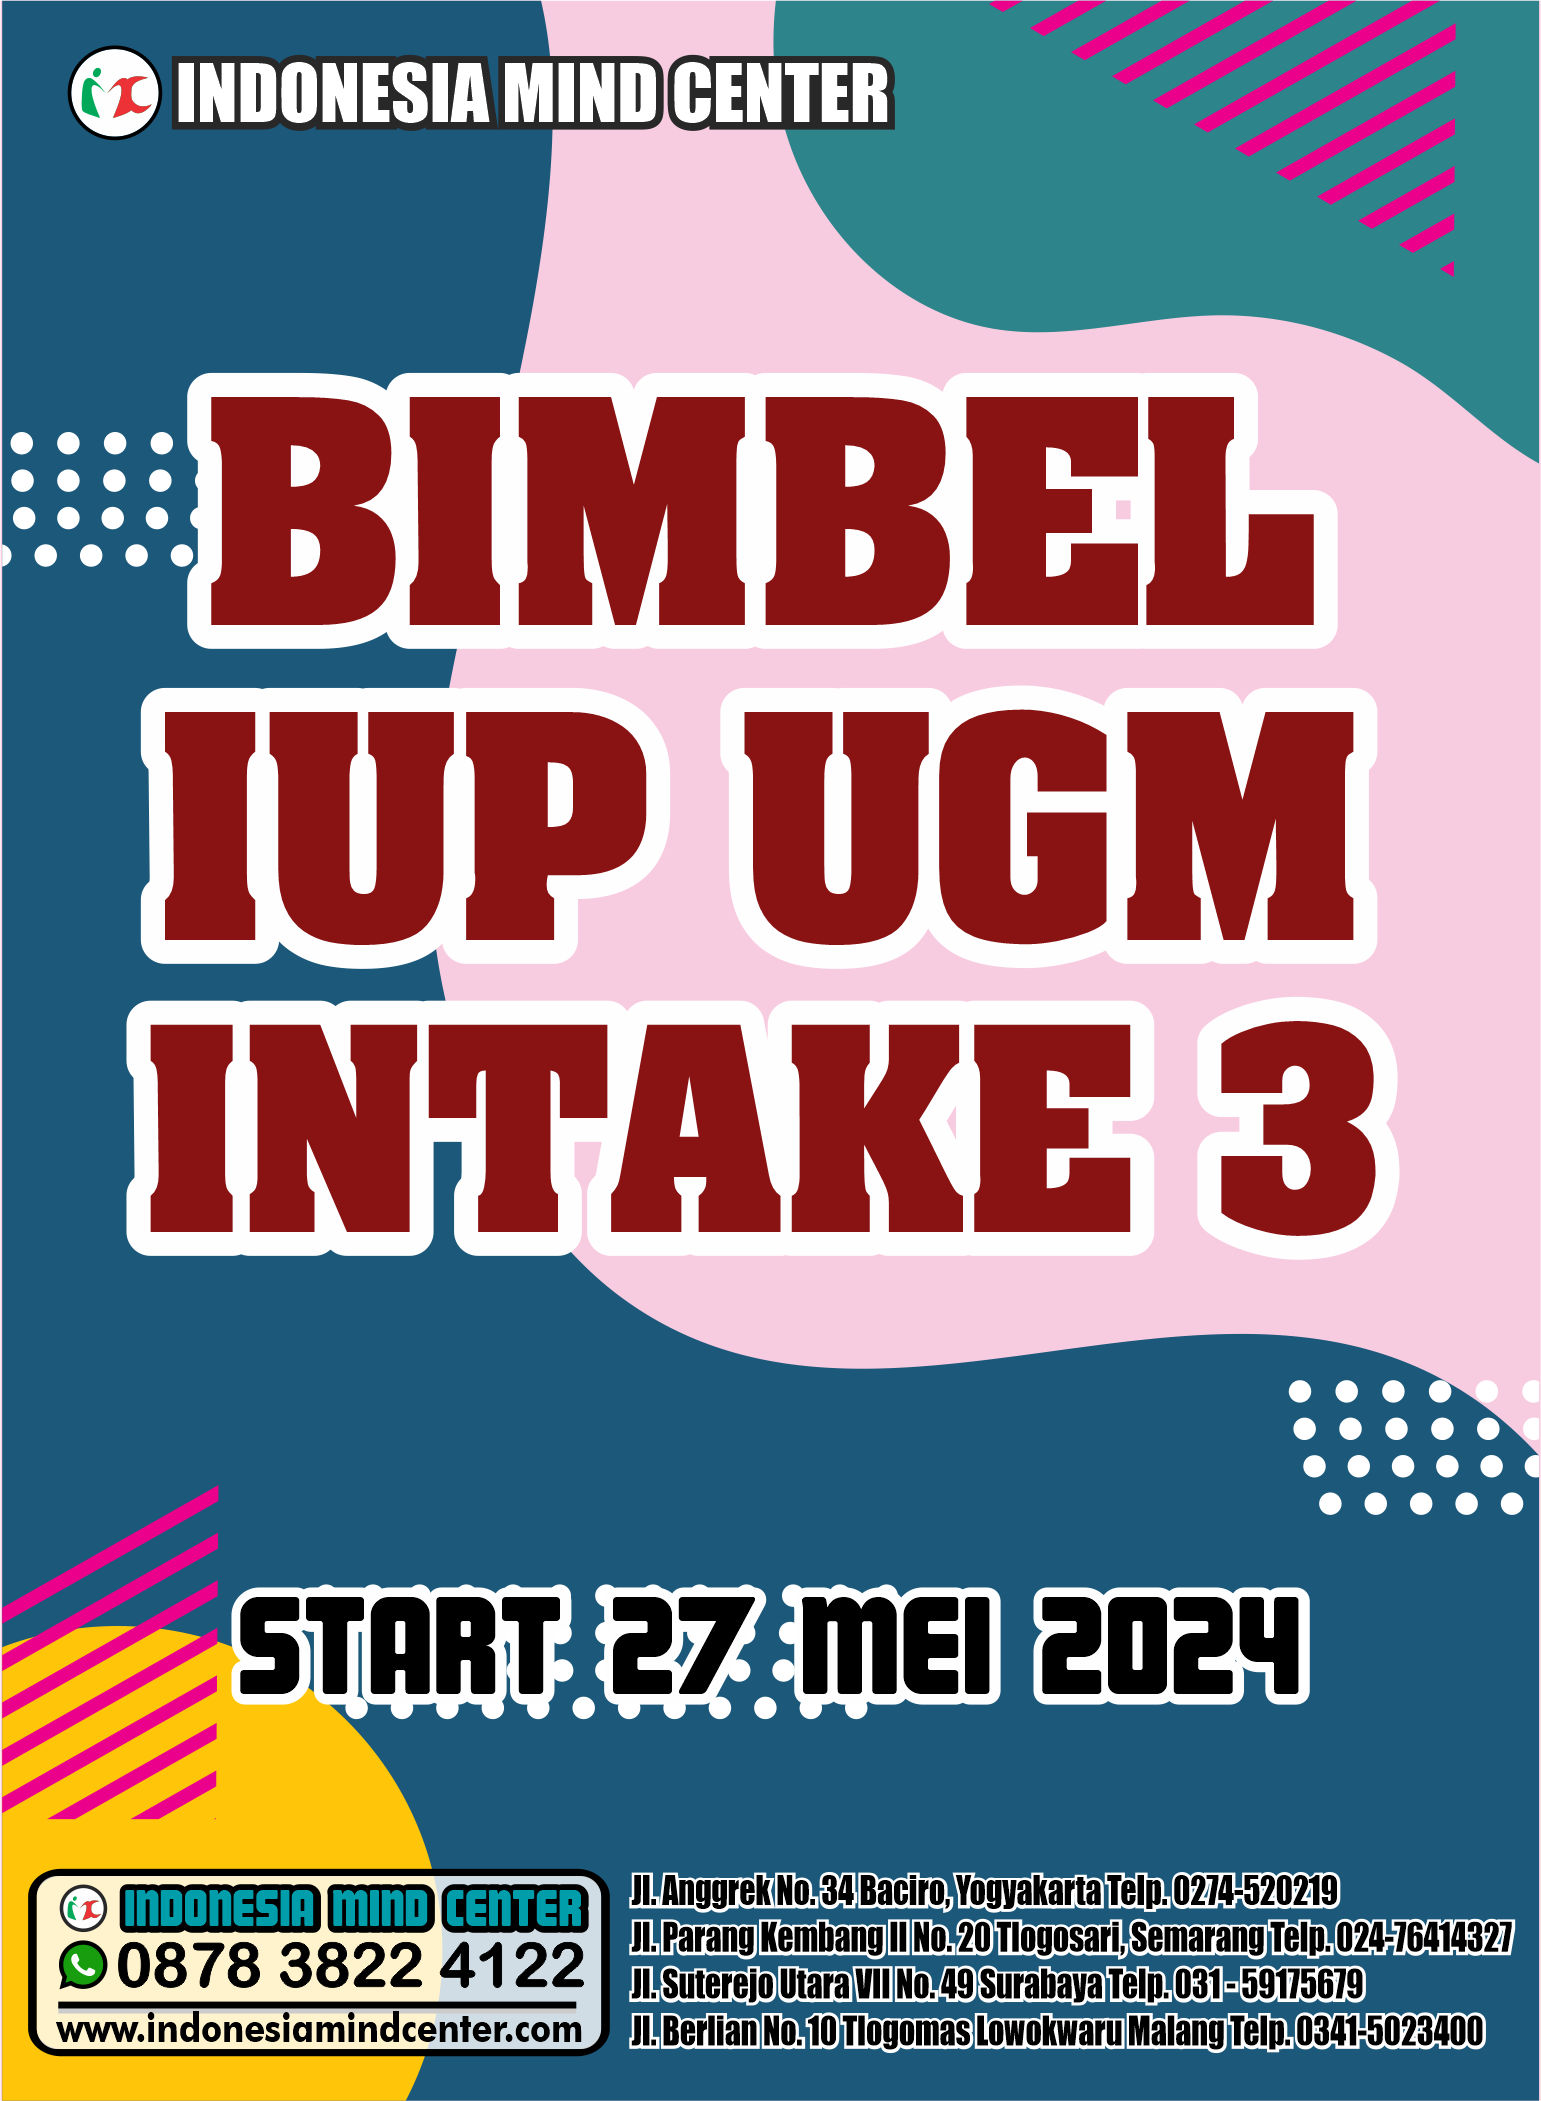 BIMBEL IUP UGM INTAKE 3 START 27 MEI 2024